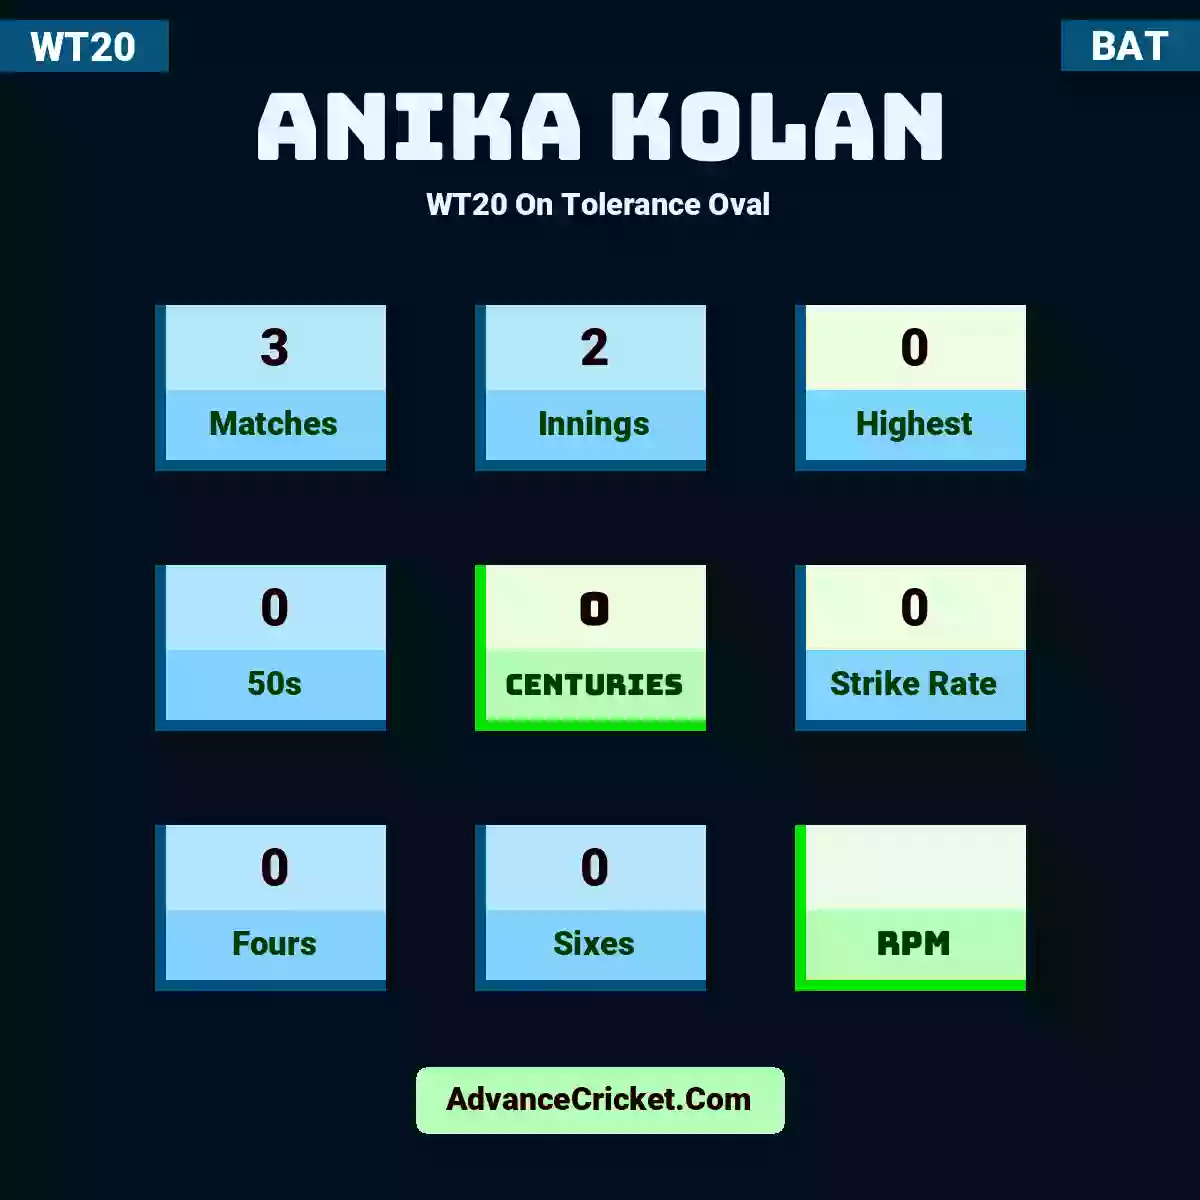 Anika Kolan WT20  On Tolerance Oval, Anika Kolan played 3 matches, scored 0 runs as highest, 0 half-centuries, and 0 centuries, with a strike rate of 0. A.Kolan hit 0 fours and 0 sixes.